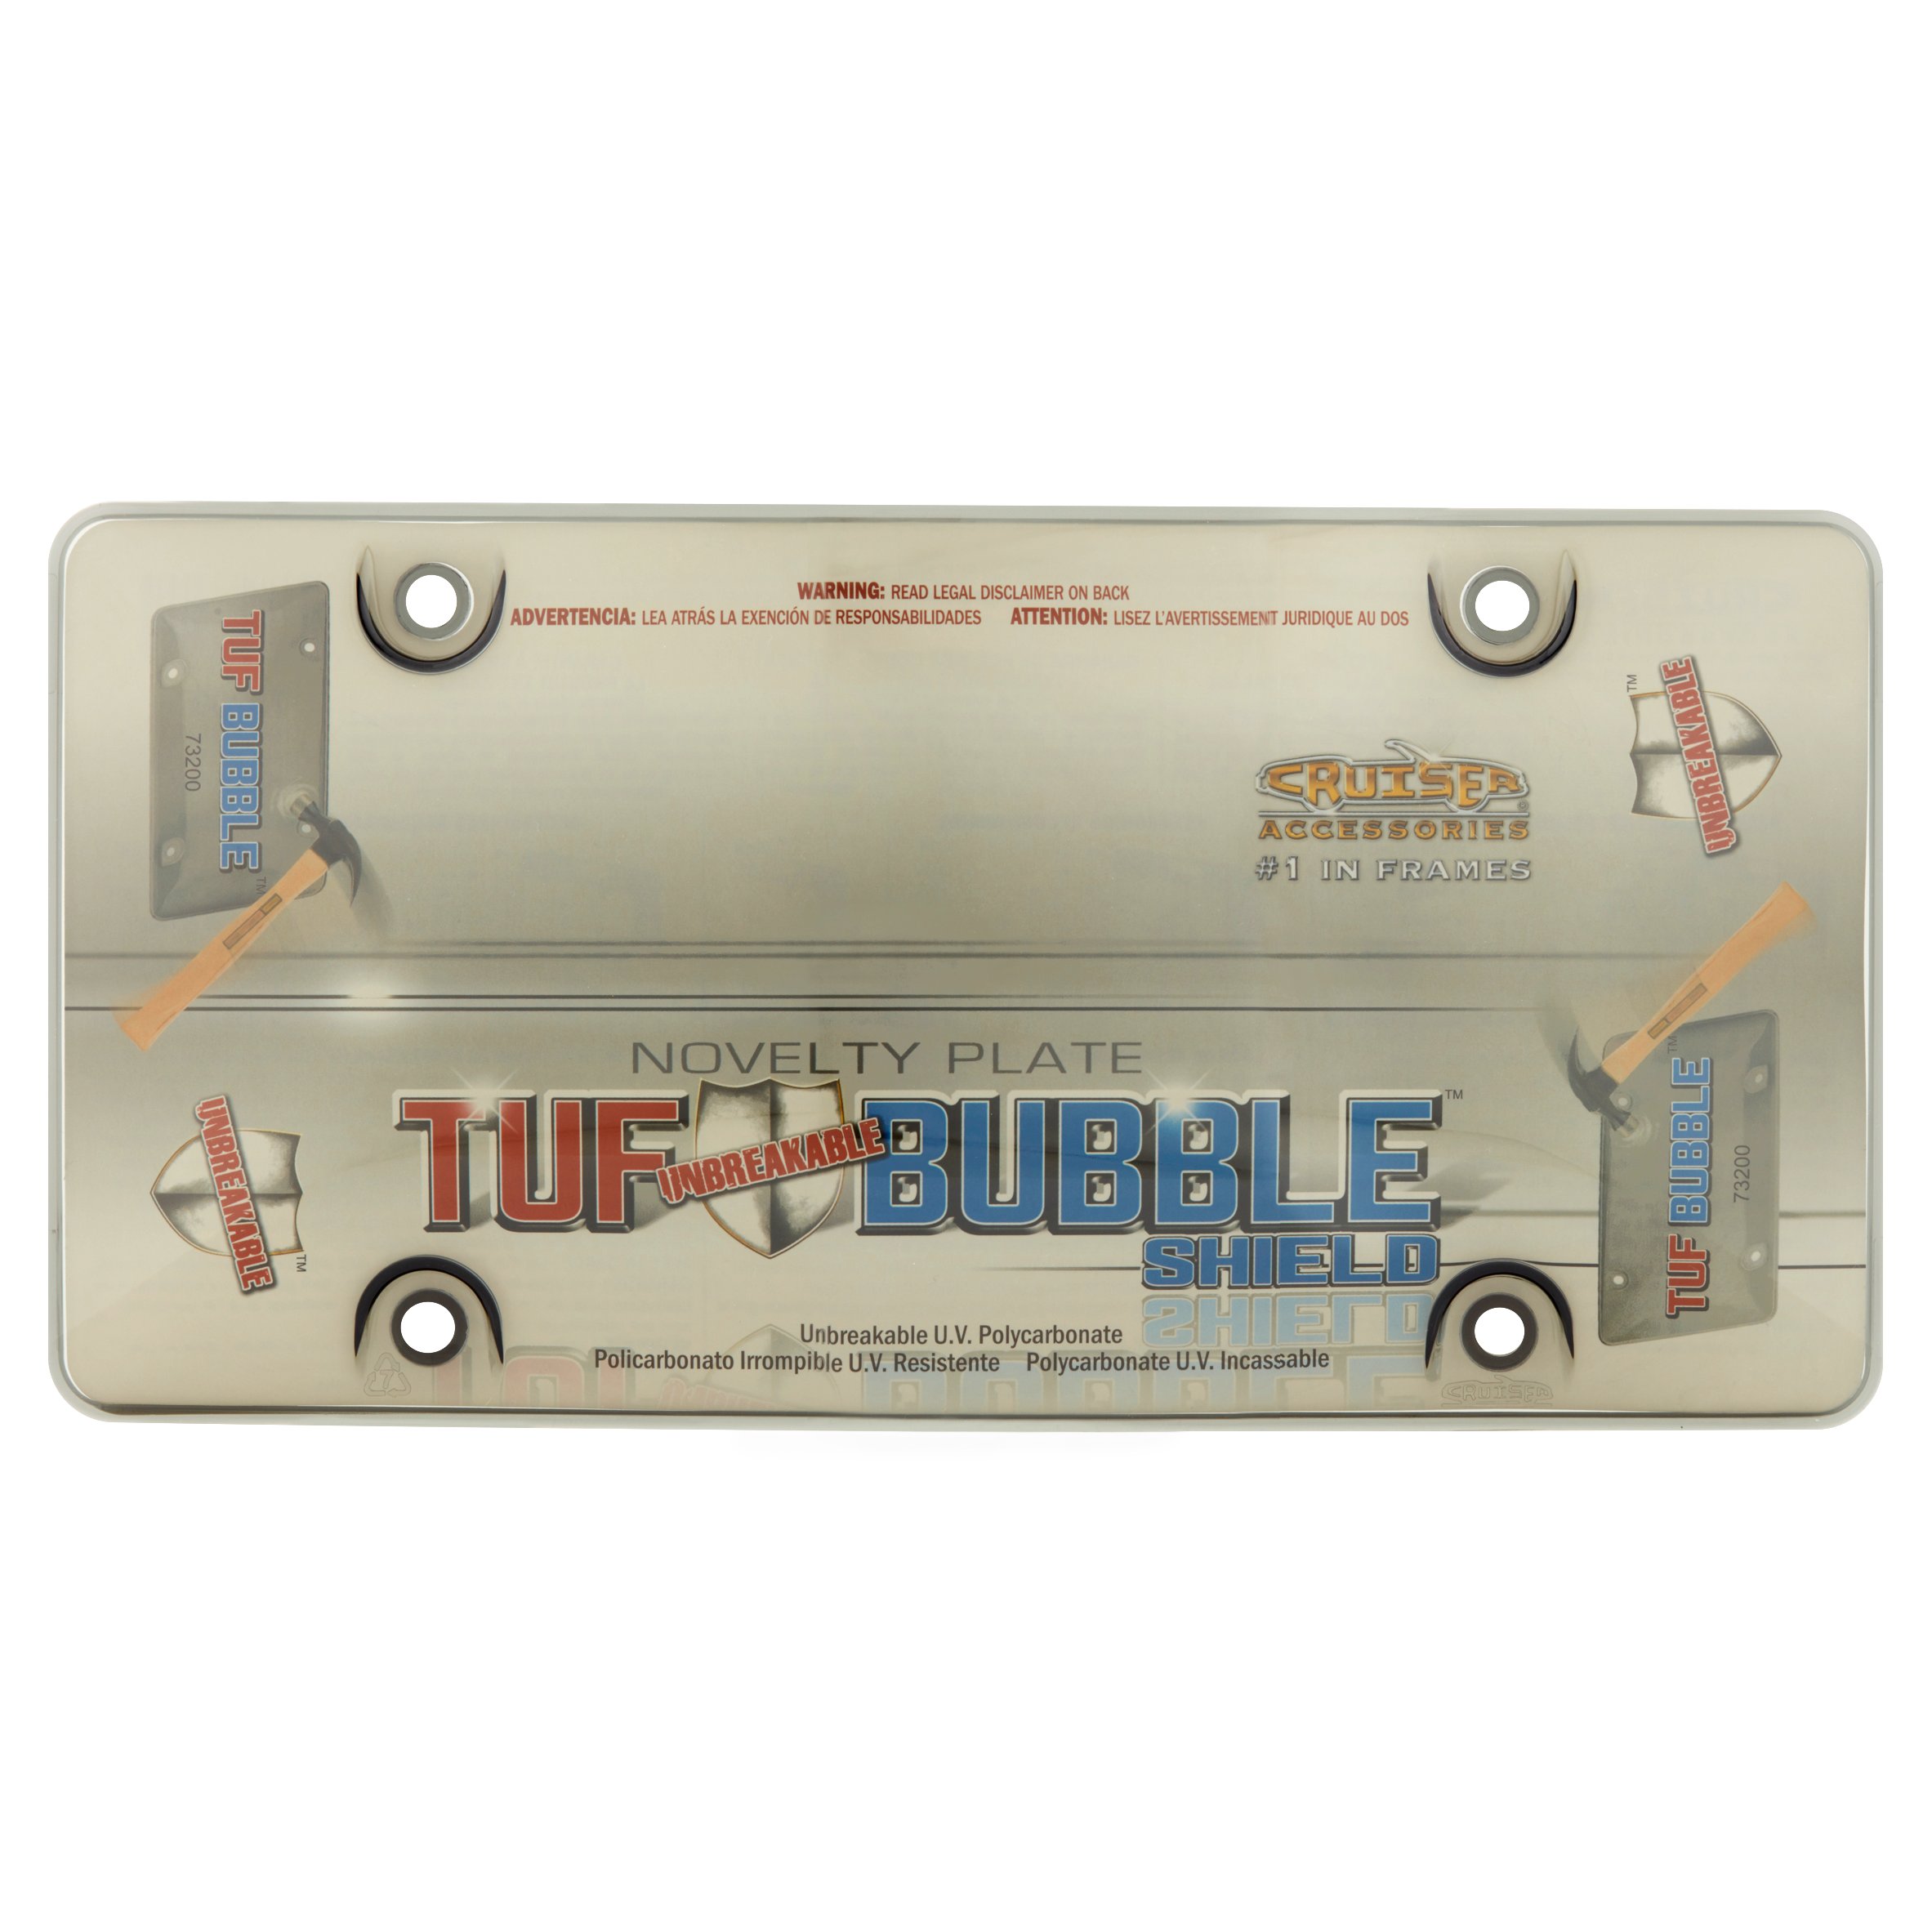 Cruiser Accesories Tuf Bubble Shield Smoke Novelty Plate - image 1 of 3